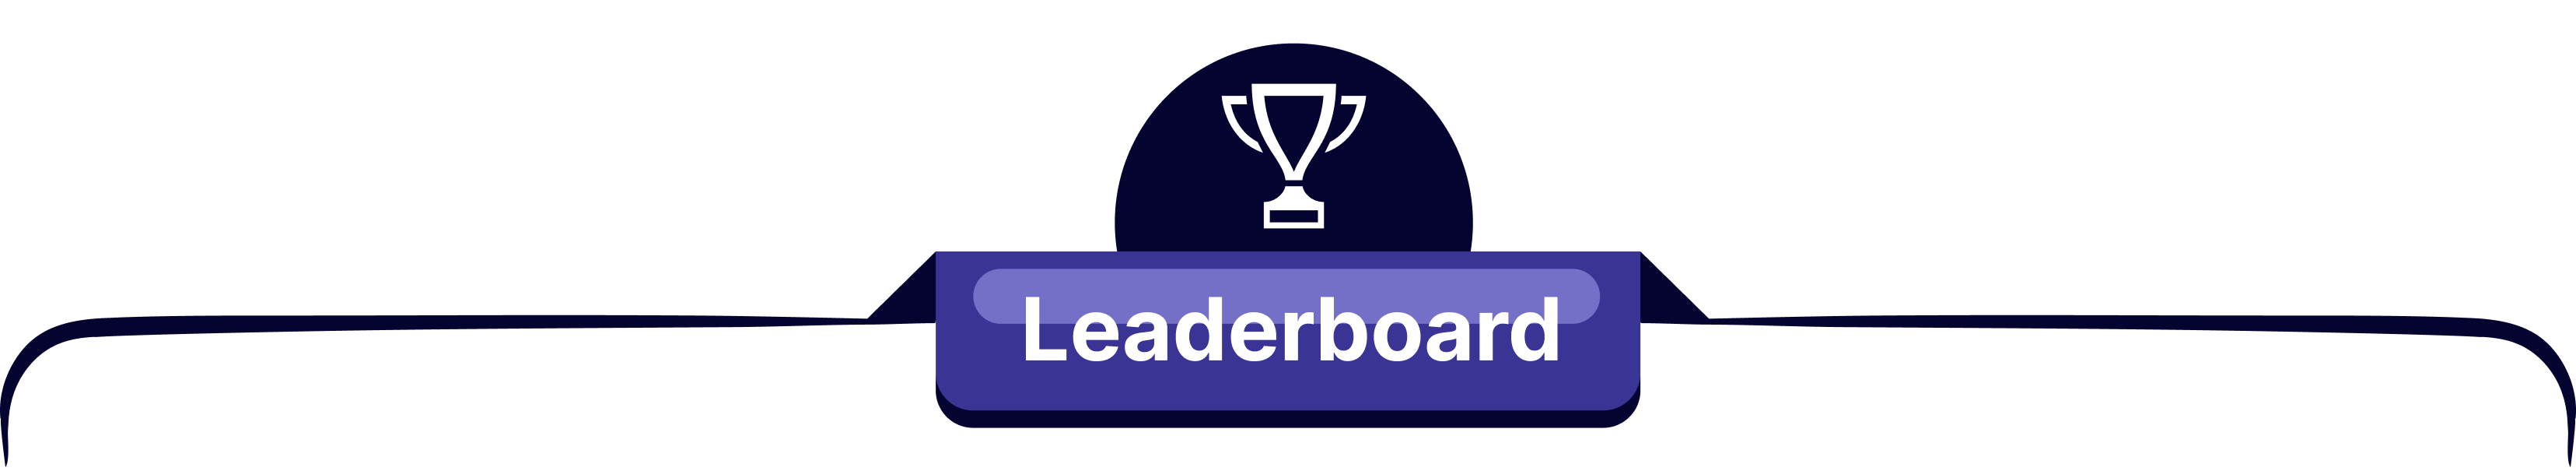 header-leaderboard